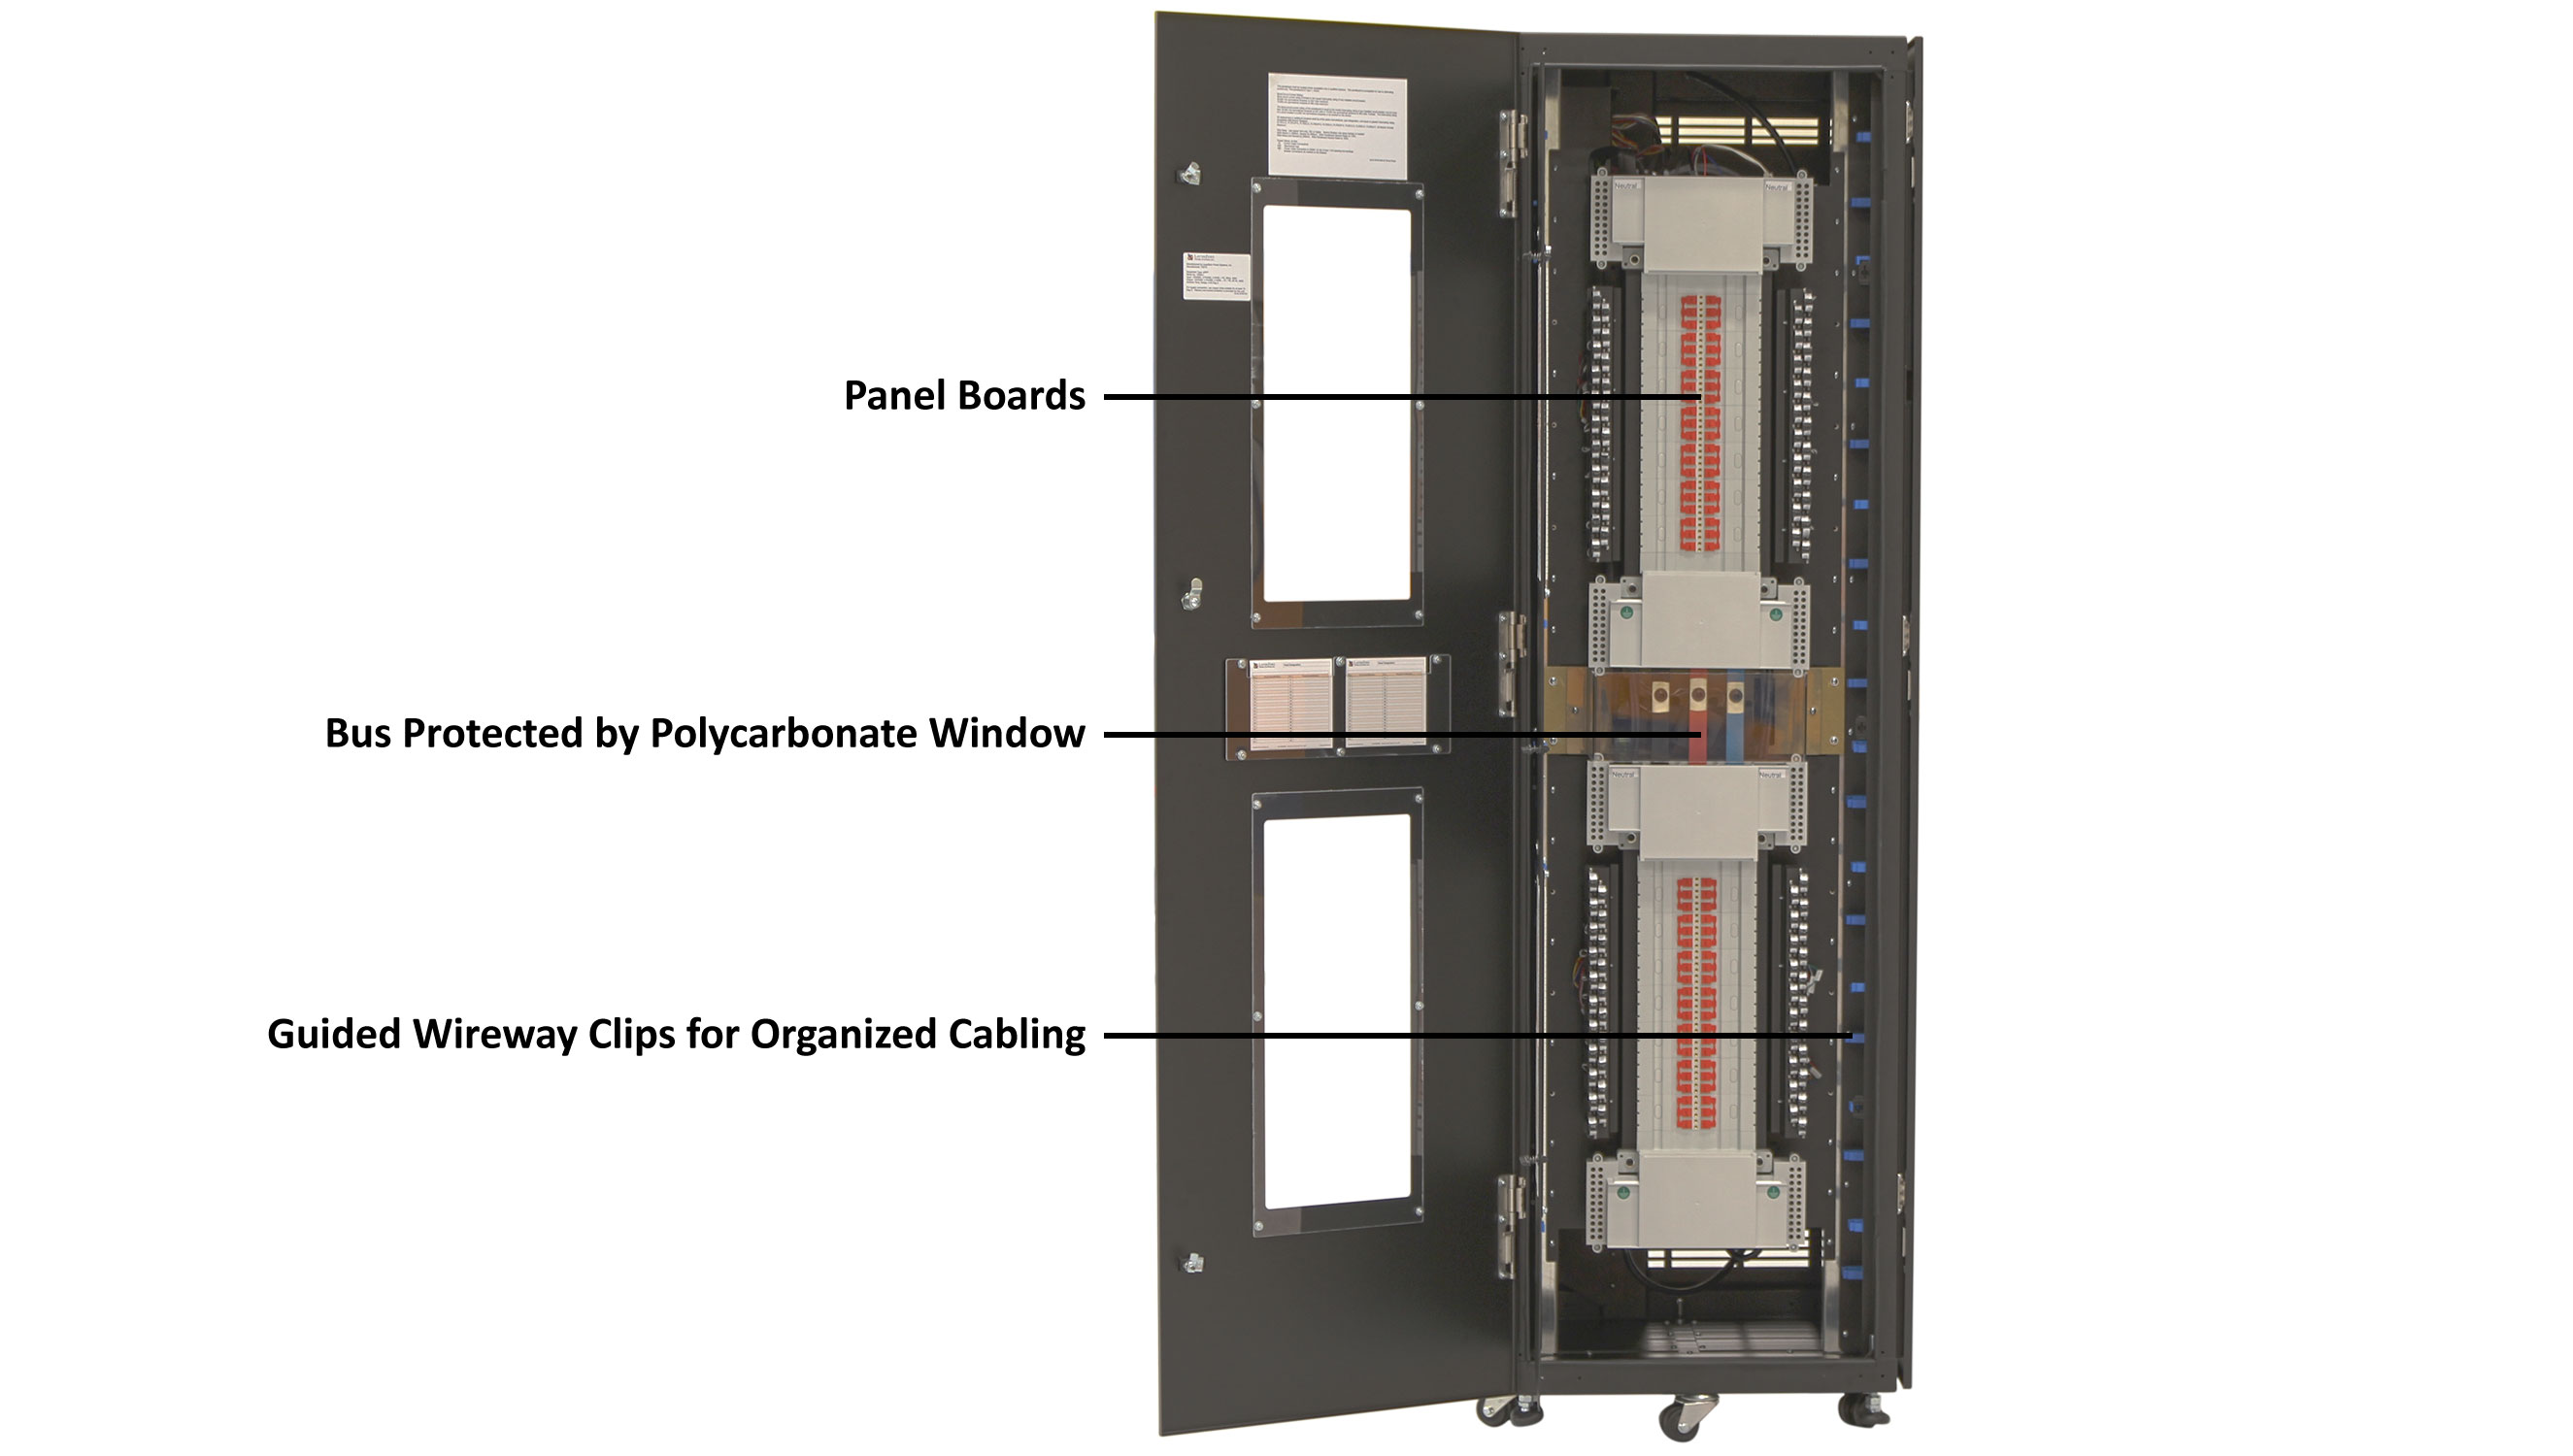 eRPP-FS Mechanical Overview, Distribution - All Doors Open